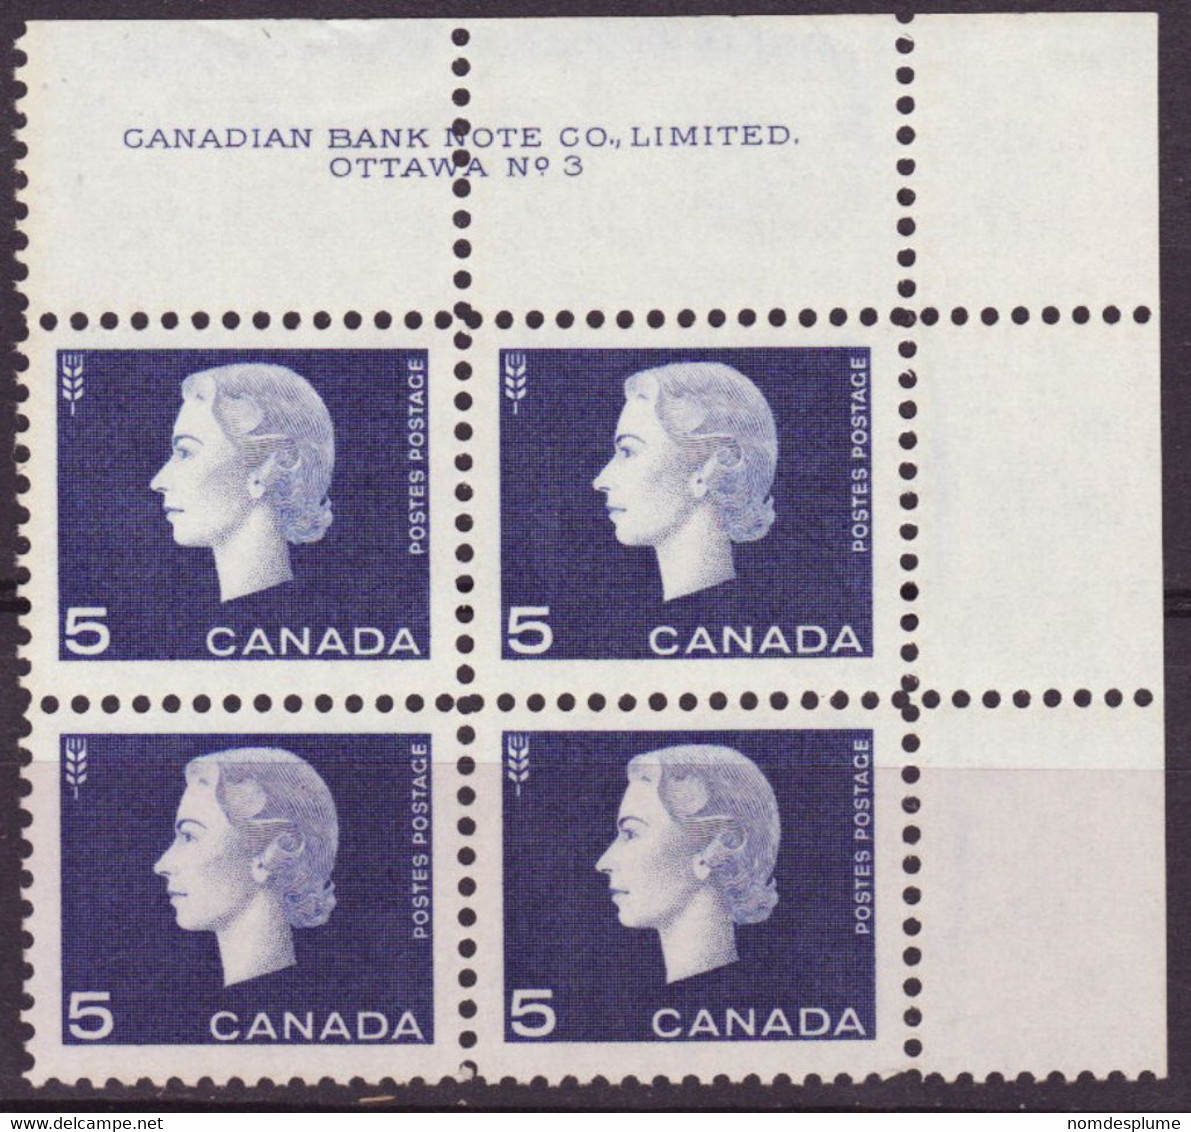 7912) Canada QE II Cameo Block Mint No Hinge Plate 3 - Plate Number & Inscriptions